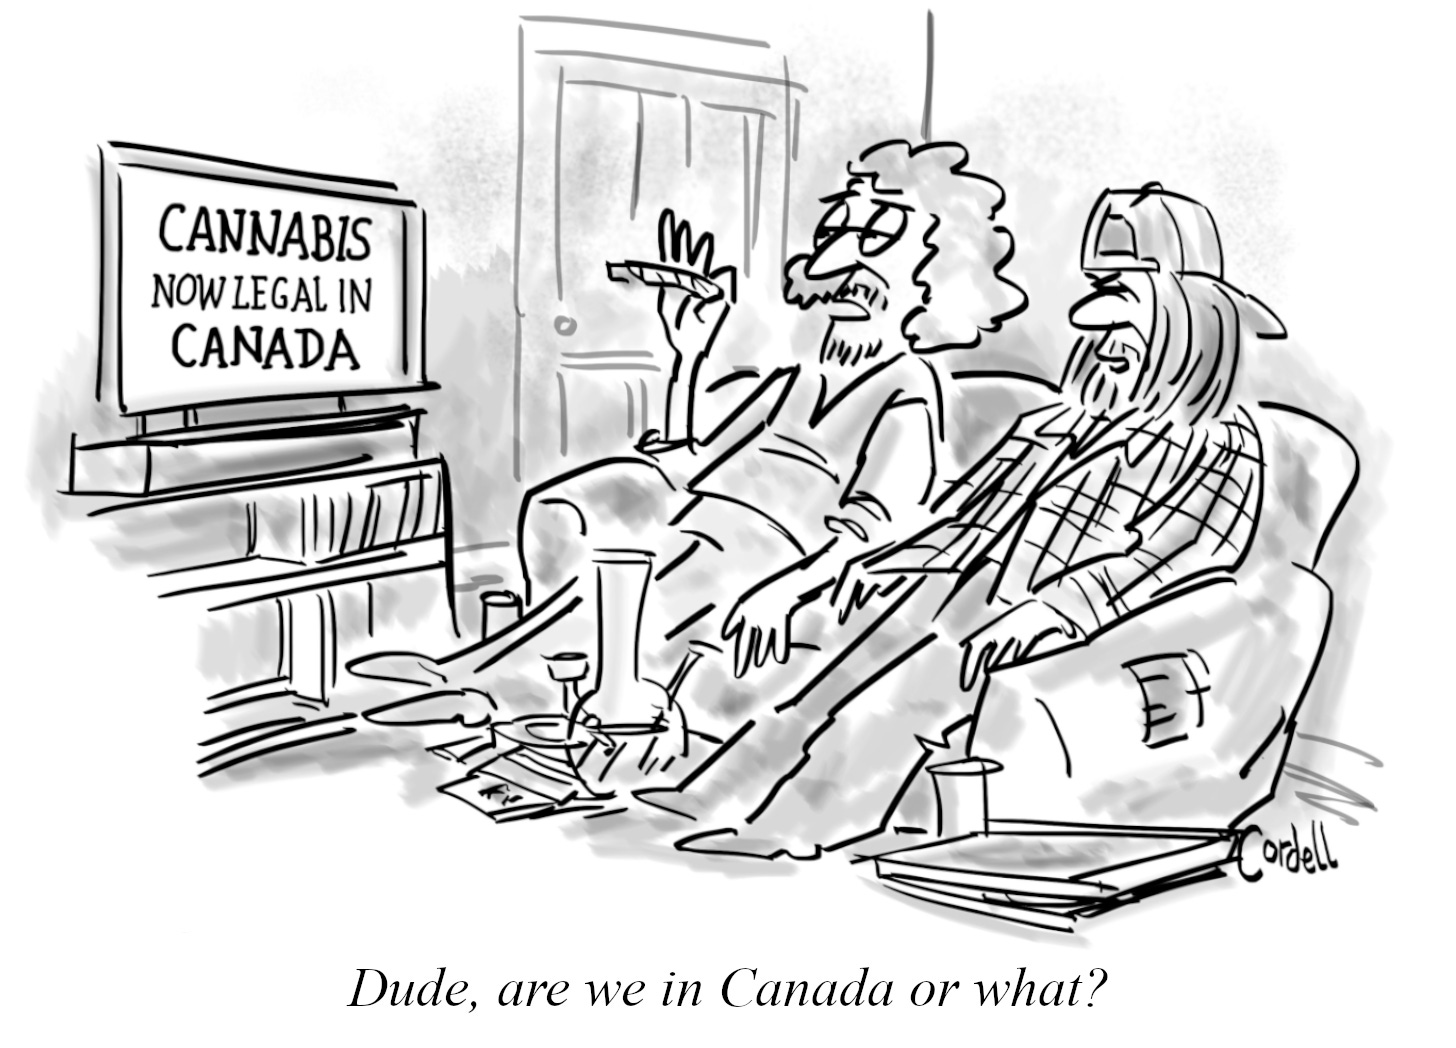 Cartoonist: Tim Cordell